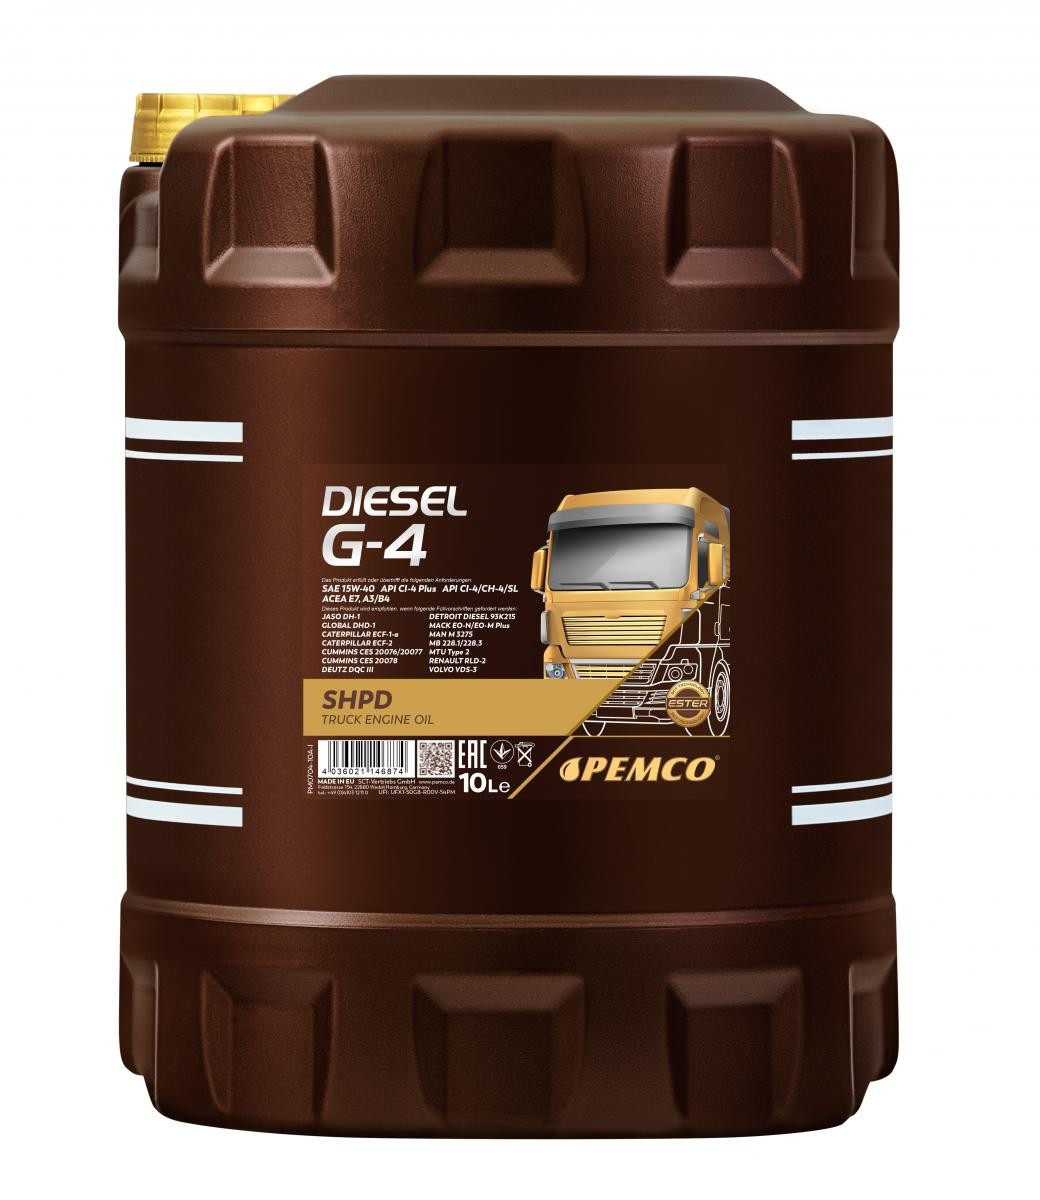 Buy Engine oil PEMCO petrol PM0704-10 Truck SHPD, DIESEL G-4 SHPD 15W-40, 10l, Mineral Oil